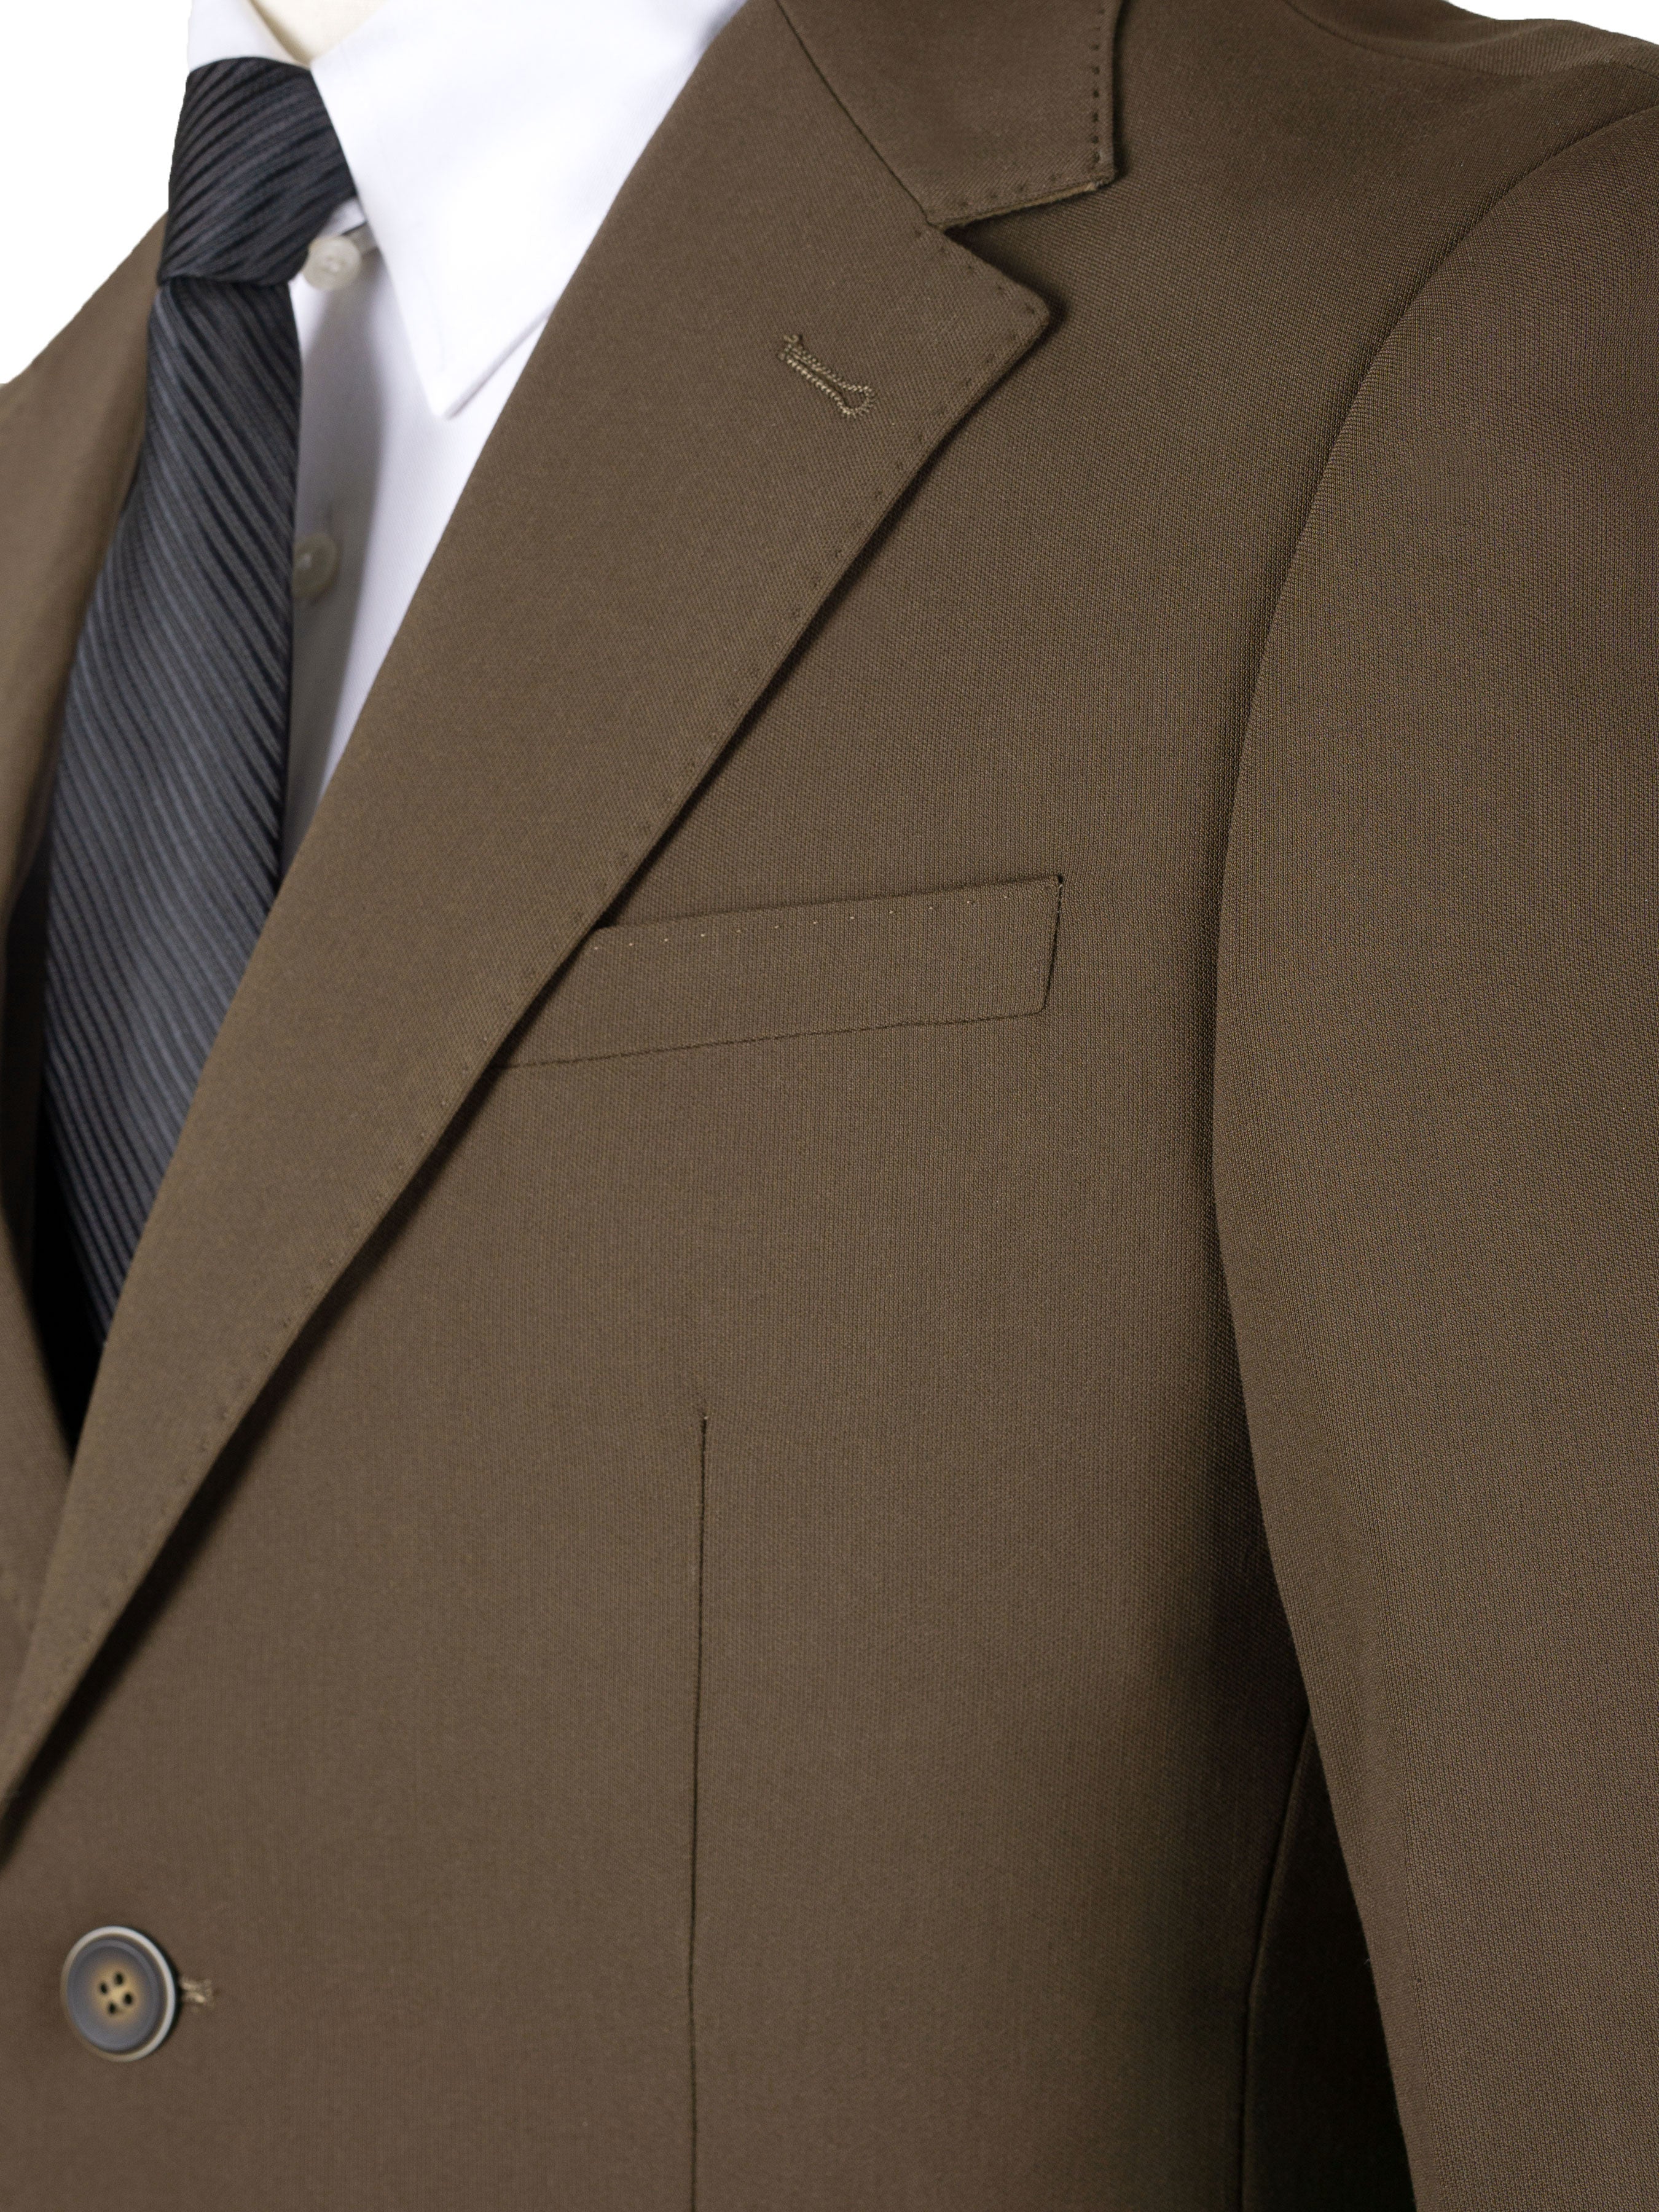 Single Breasted Suit Blazer - Coffee Plain (Notch Lapel) - Zeve Shoes